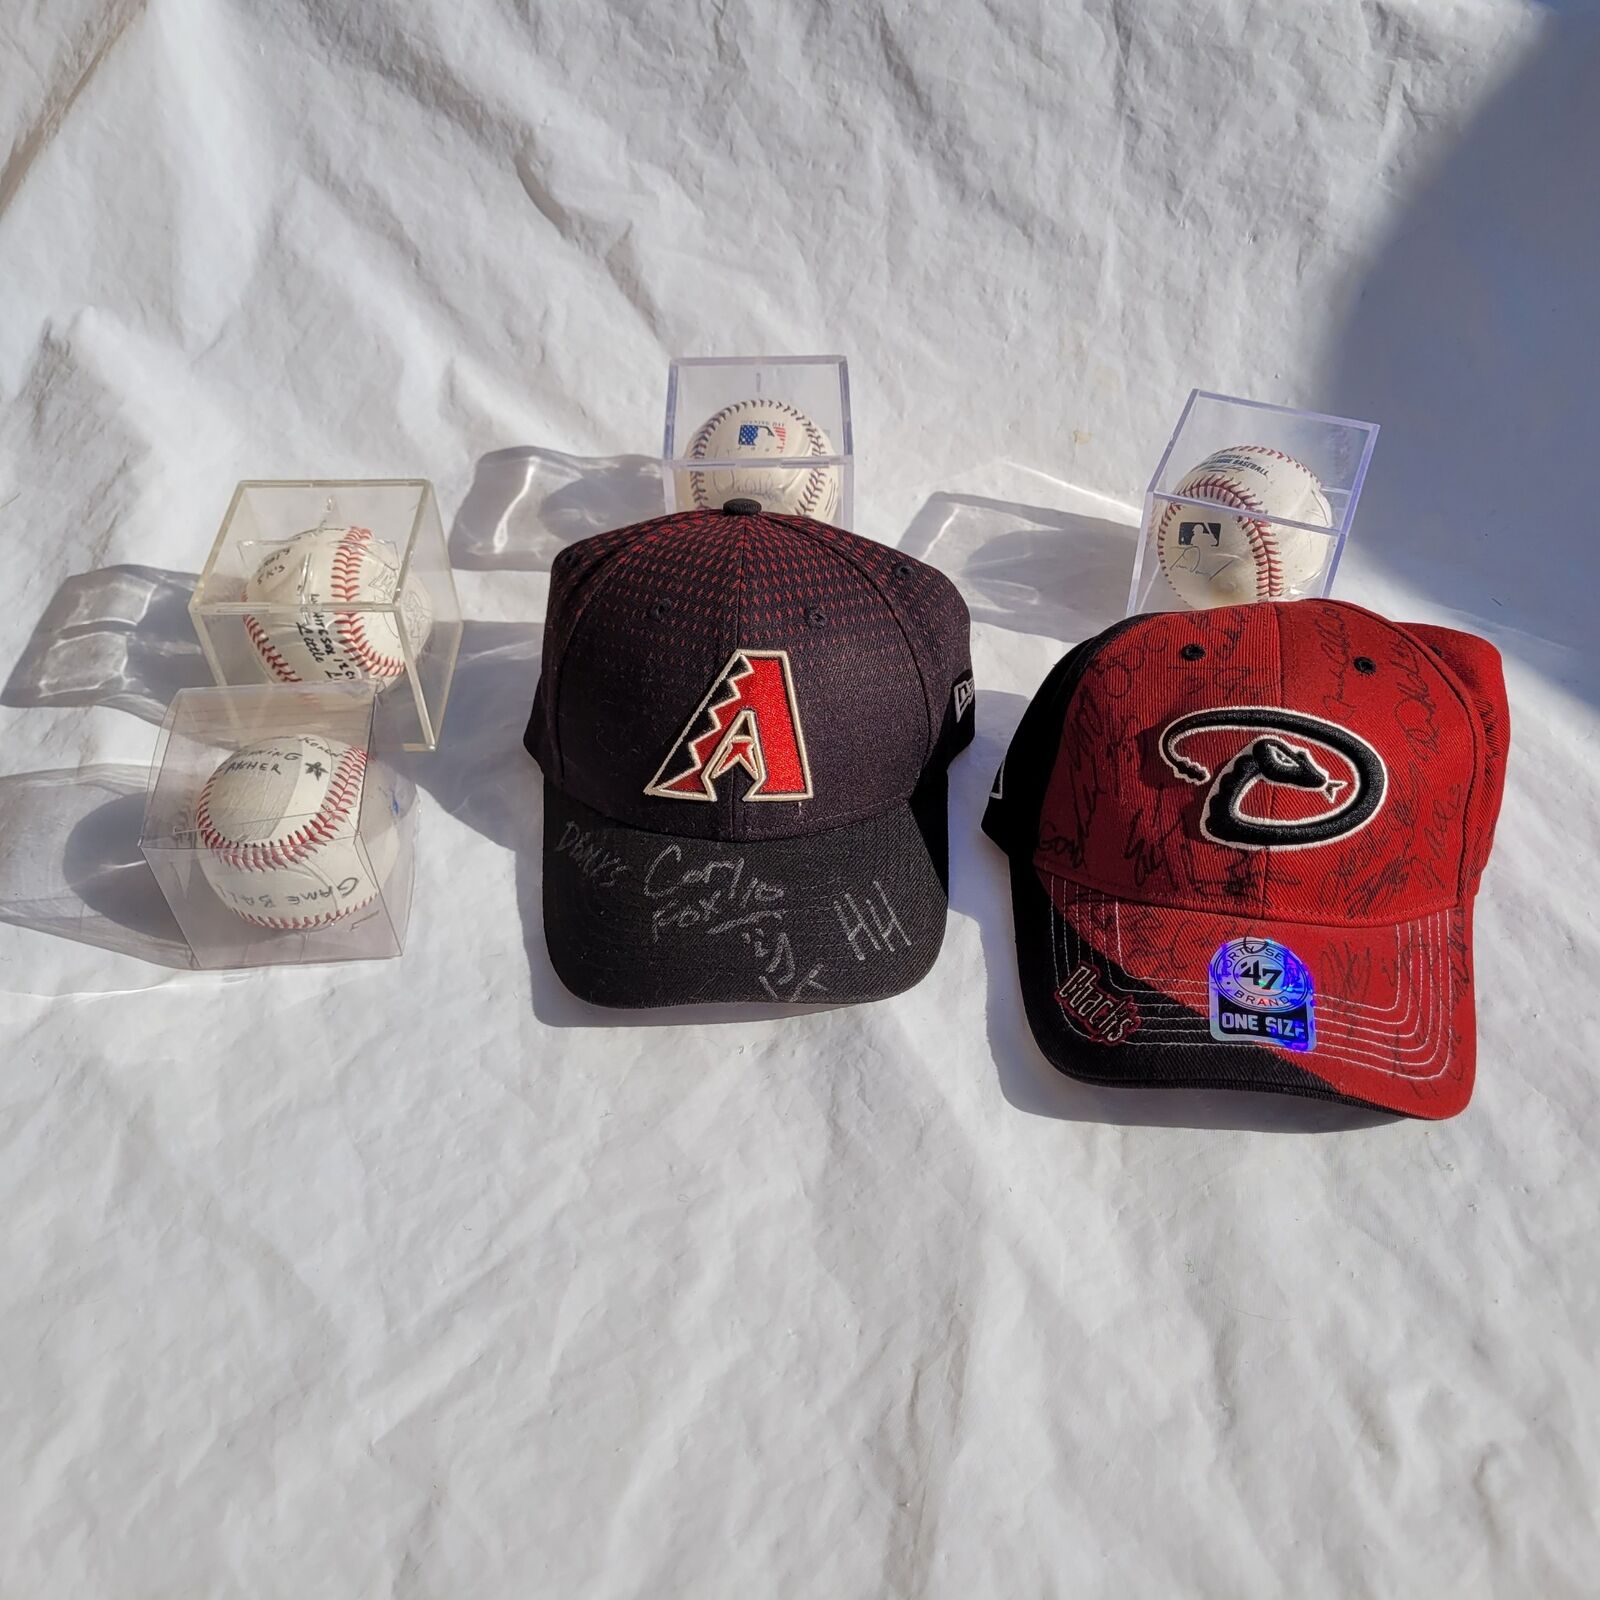 2 Arizona Diamondbacks Autographed Hats and 4 MLB Game Baseballs Signed